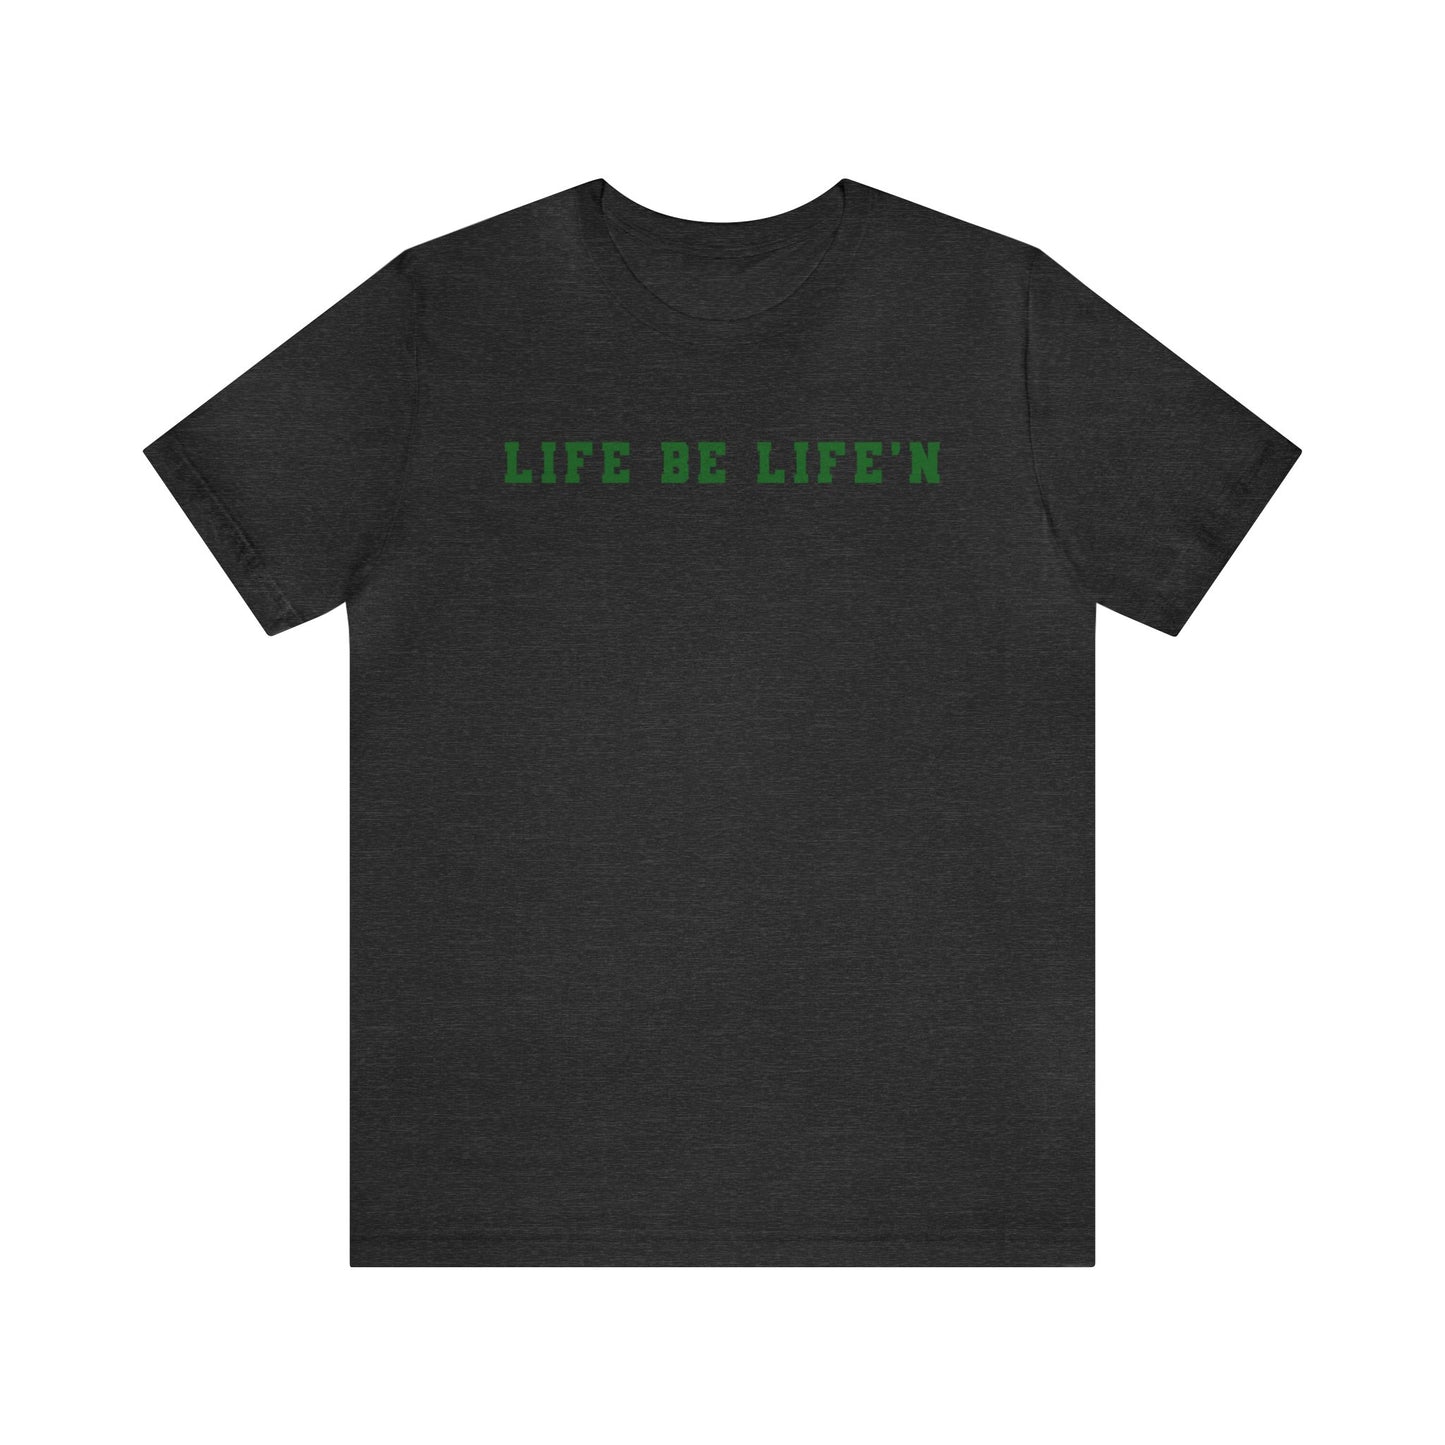 Green Life Be Life'n Unisex Jersey Short Sleeve Tee